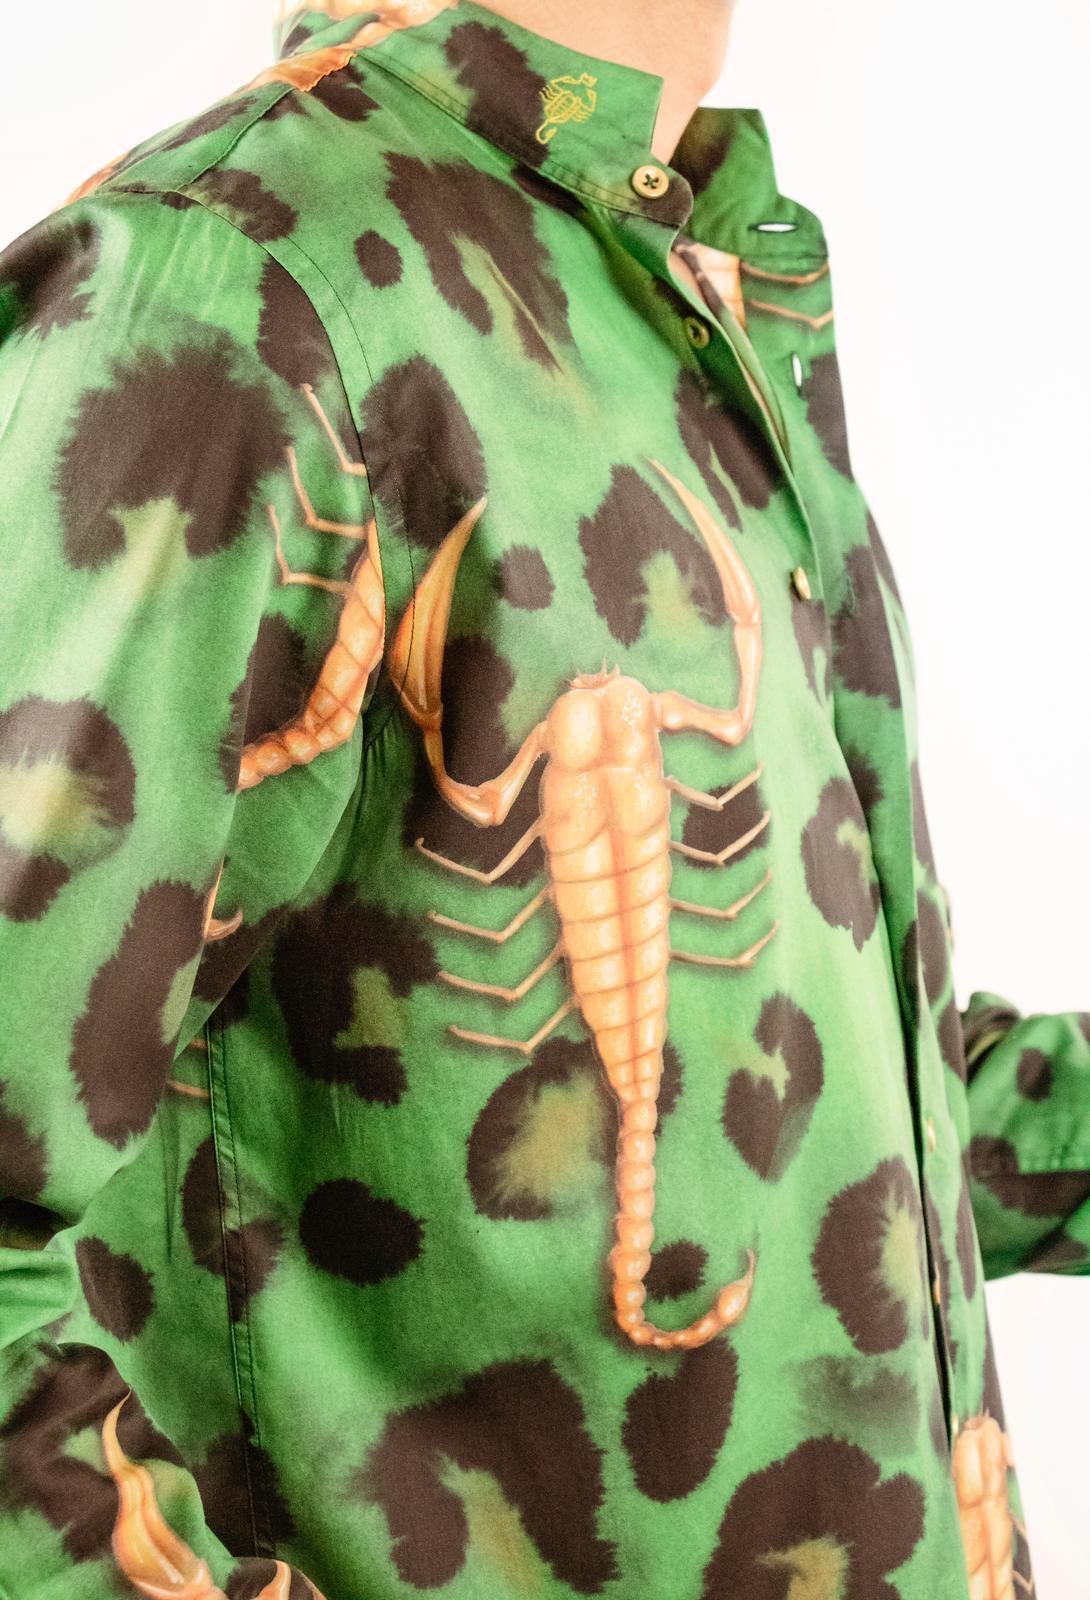 Brown Green scorpion shirt NWOT